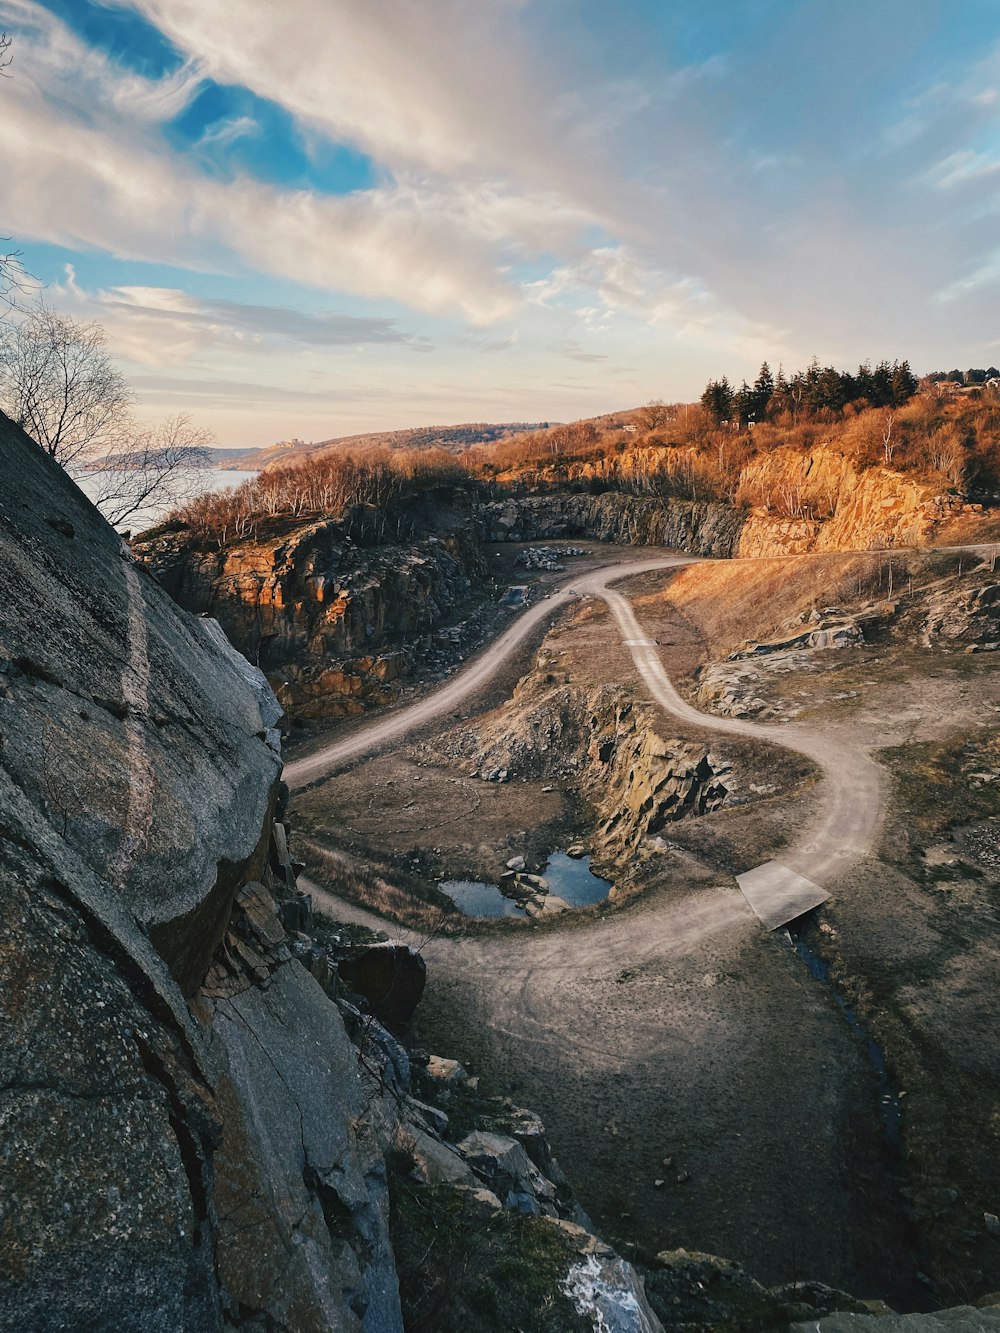 a dirt road winding through a rocky landscape